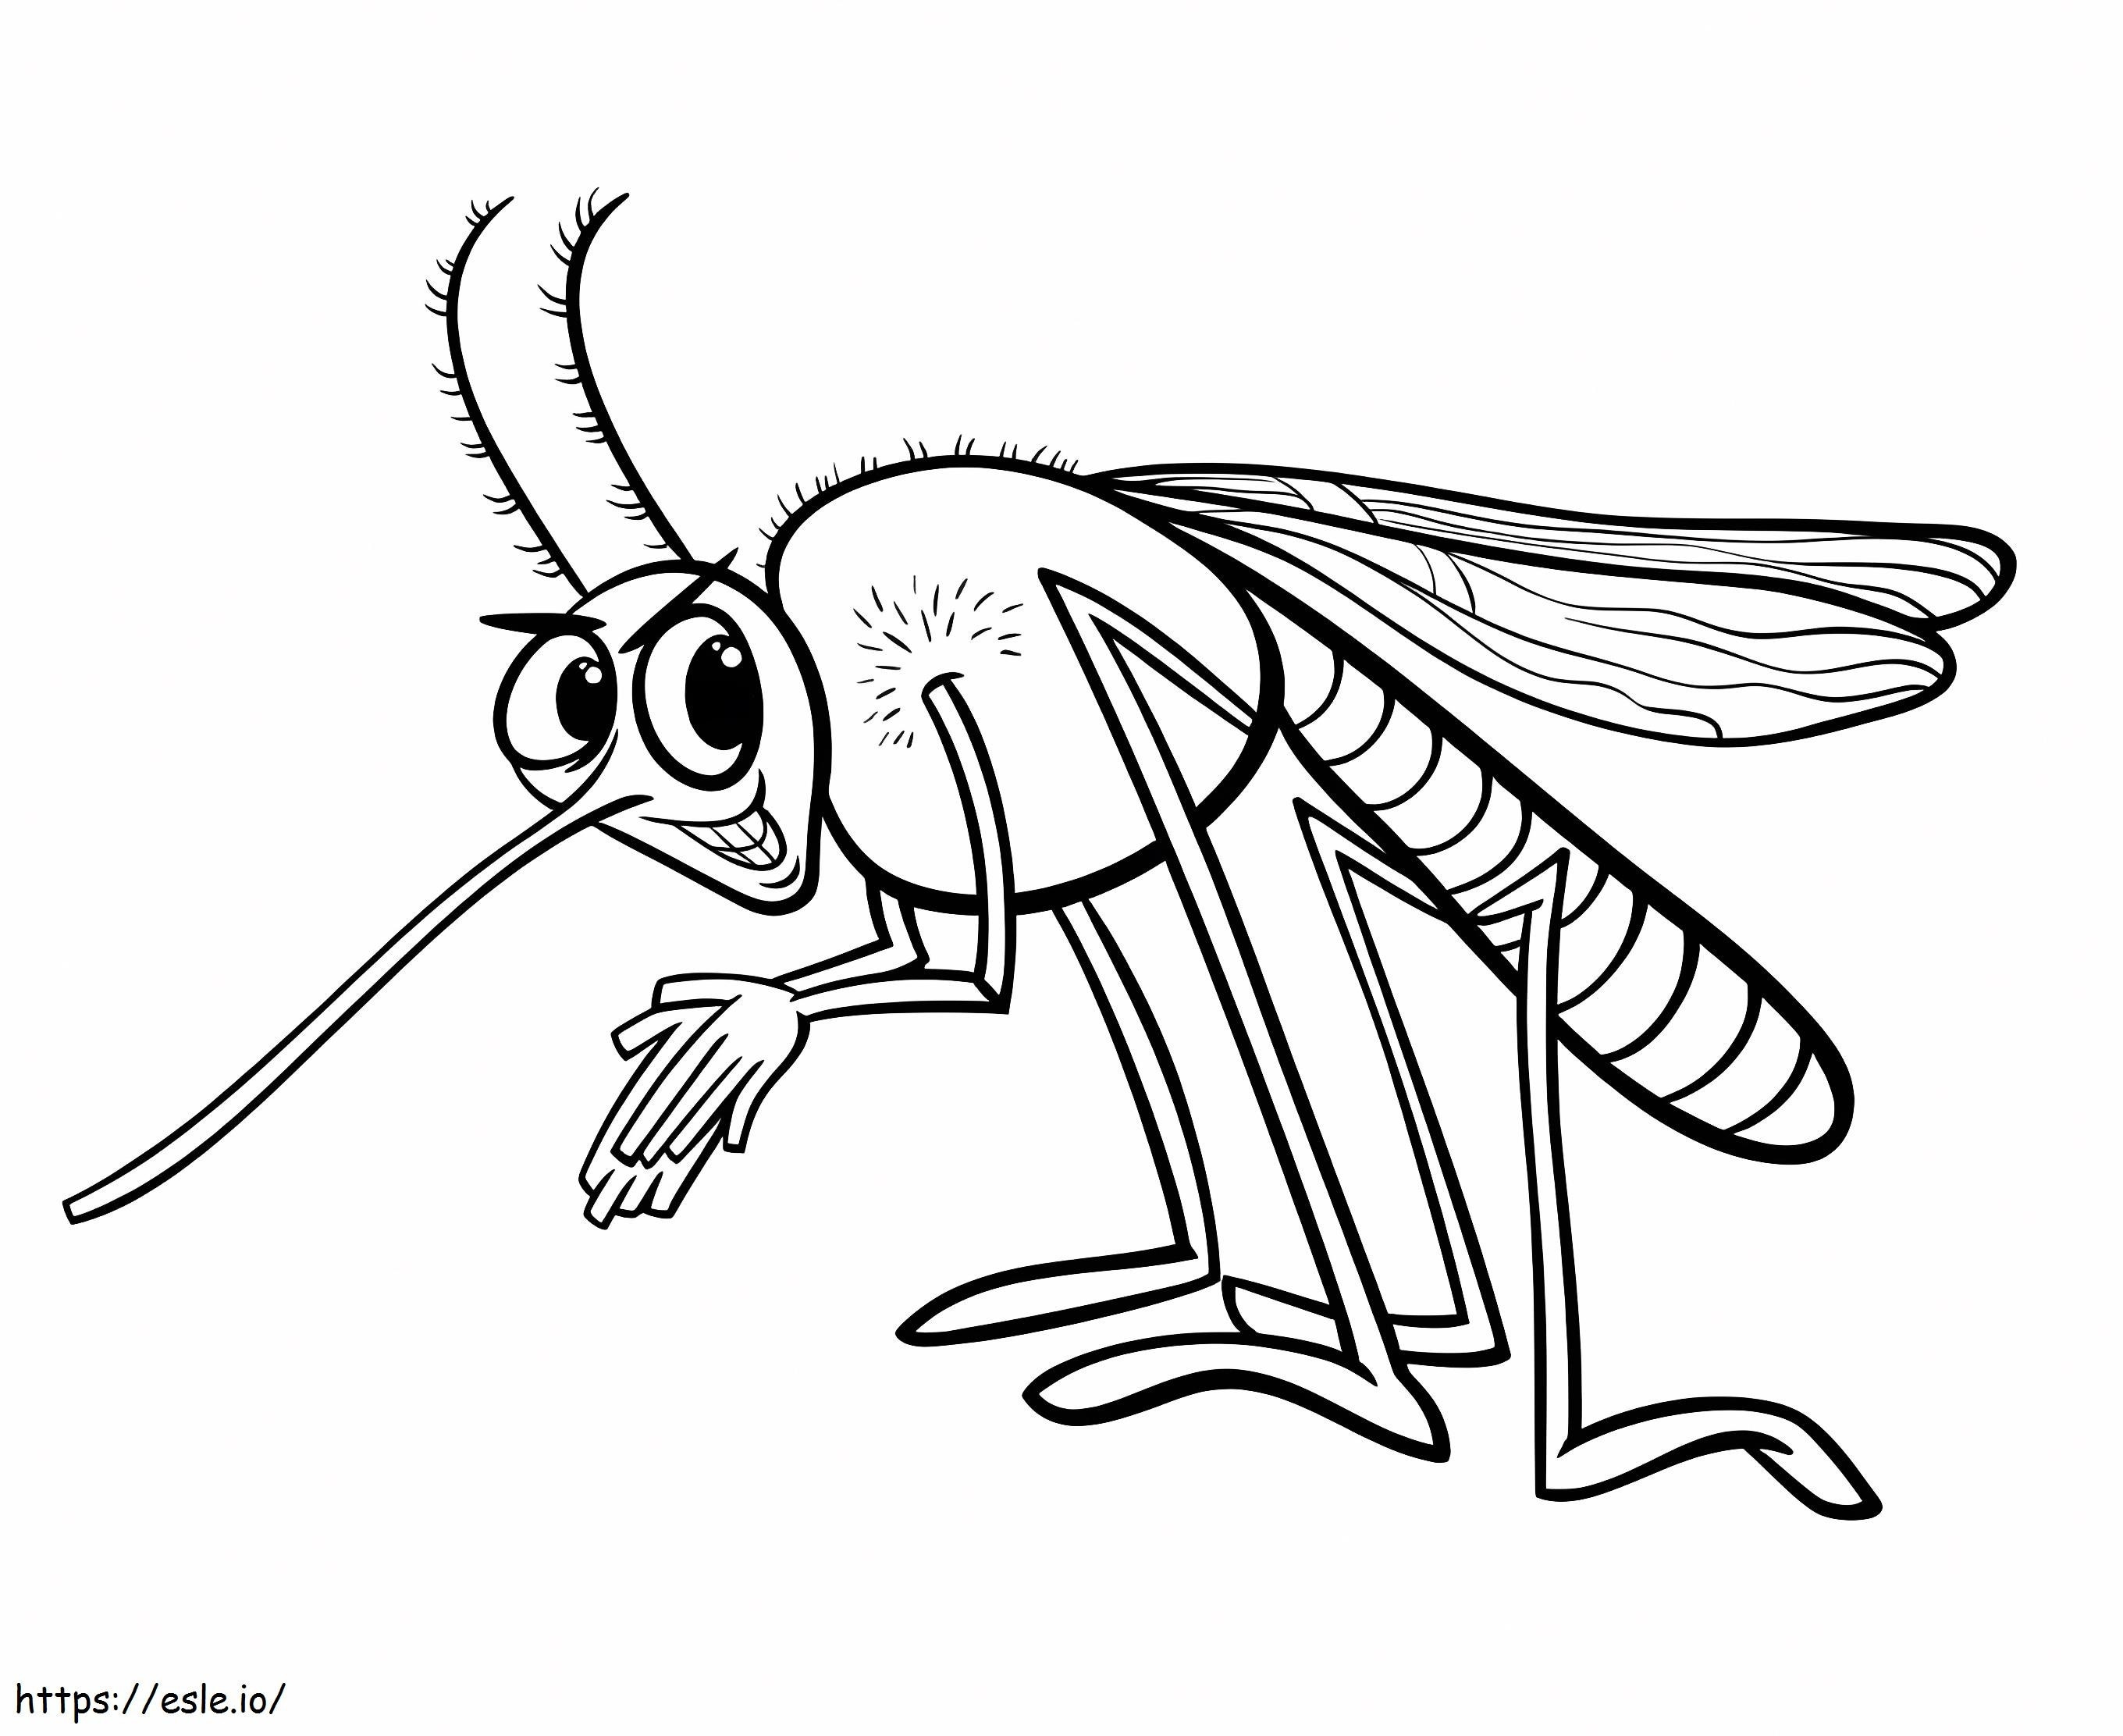 Böse Mücke ausmalbilder